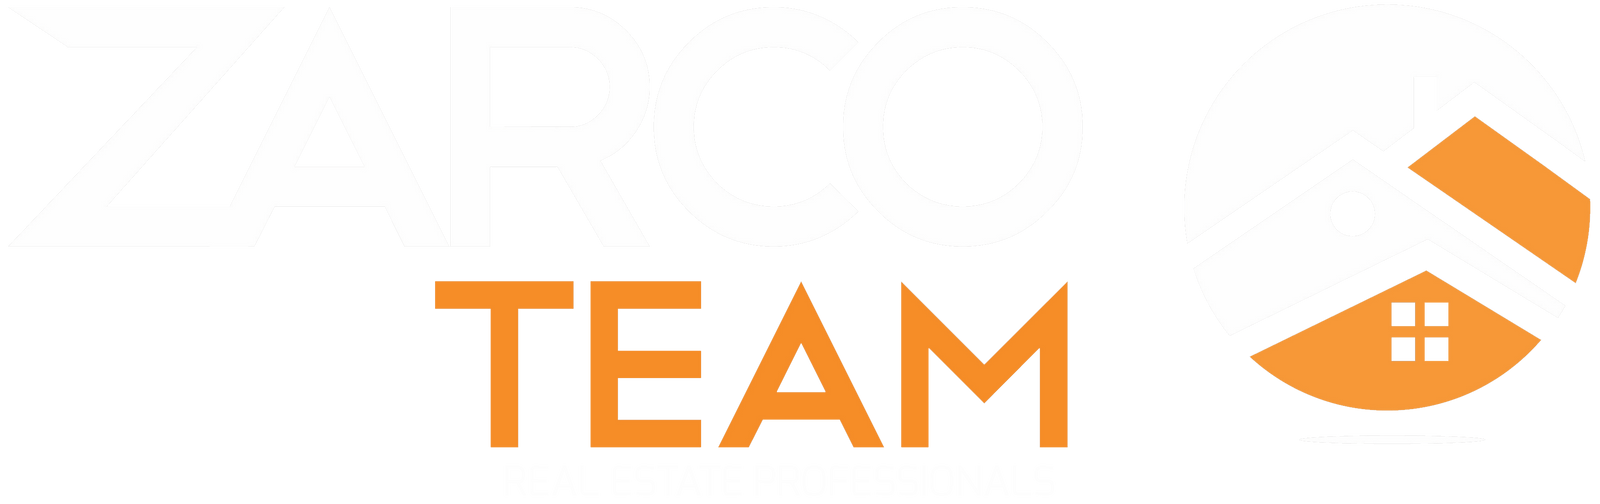 Zarco Team Logo